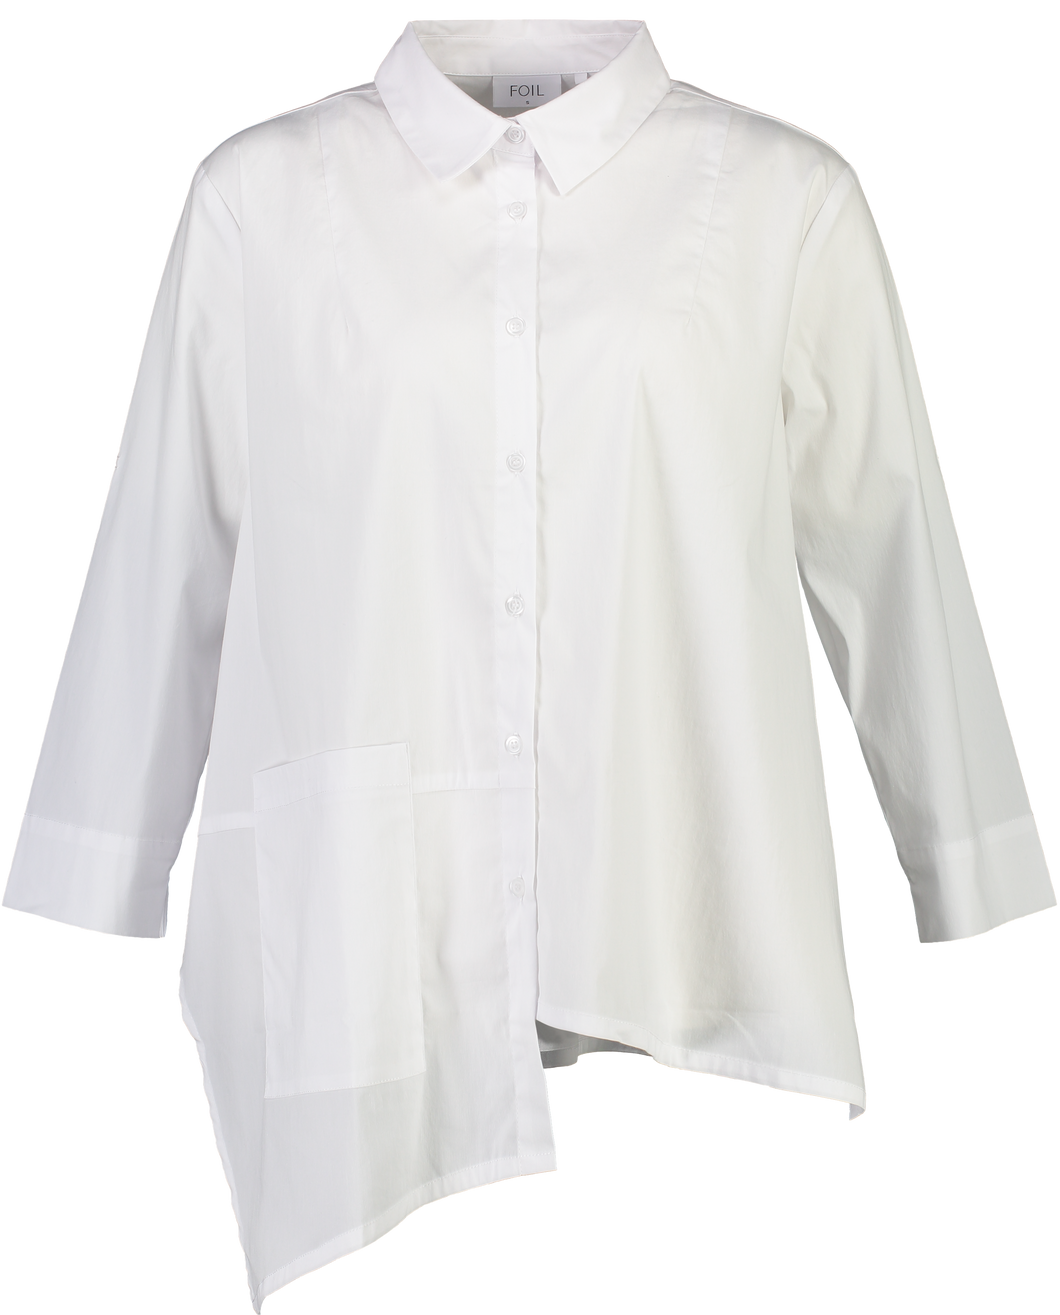 Foil - White Shirt